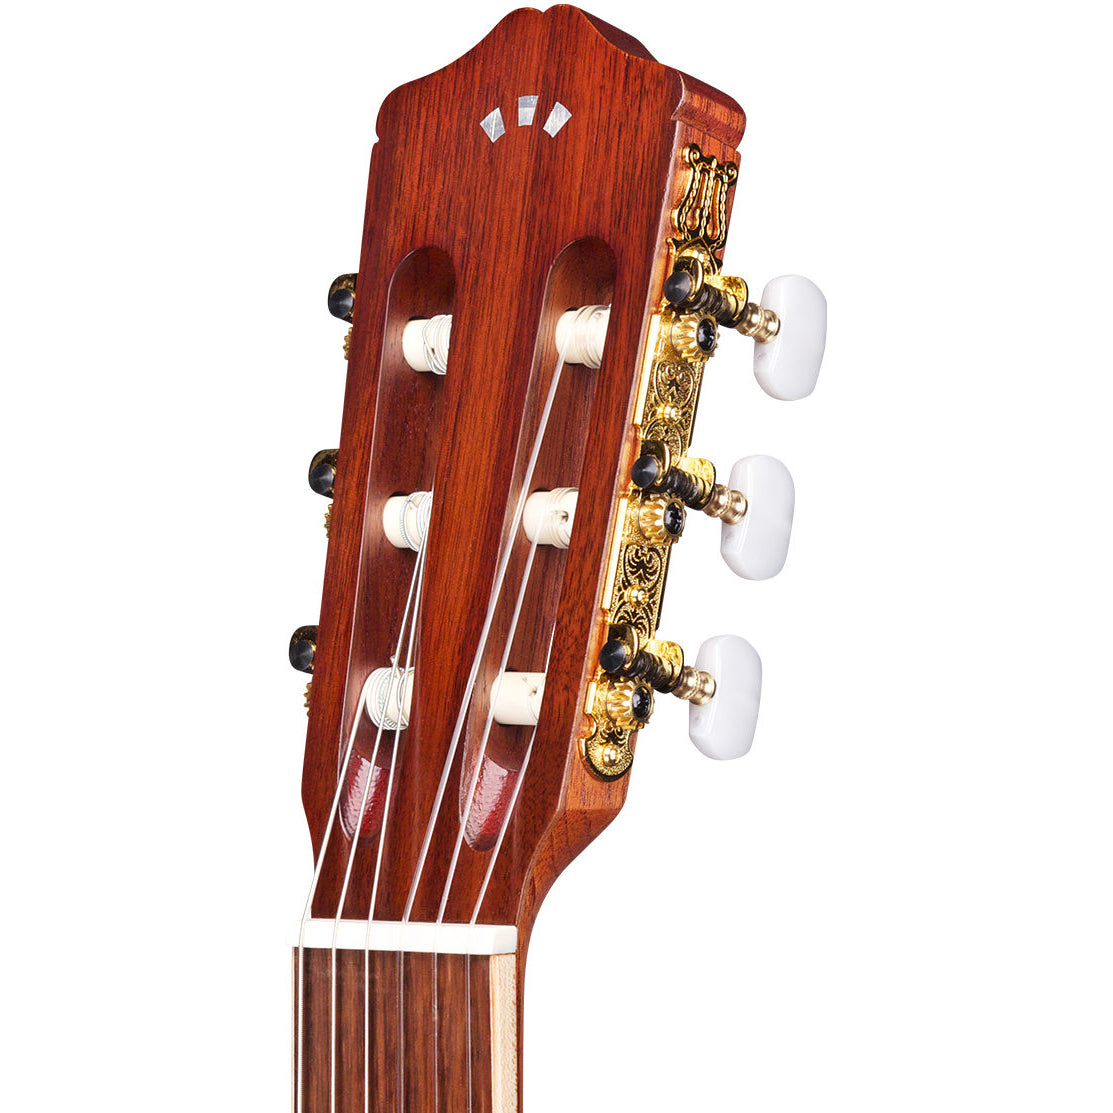 Cordoba C4-CE - Edgeburst, Solid Mahogany Top - Nylon String Guitar